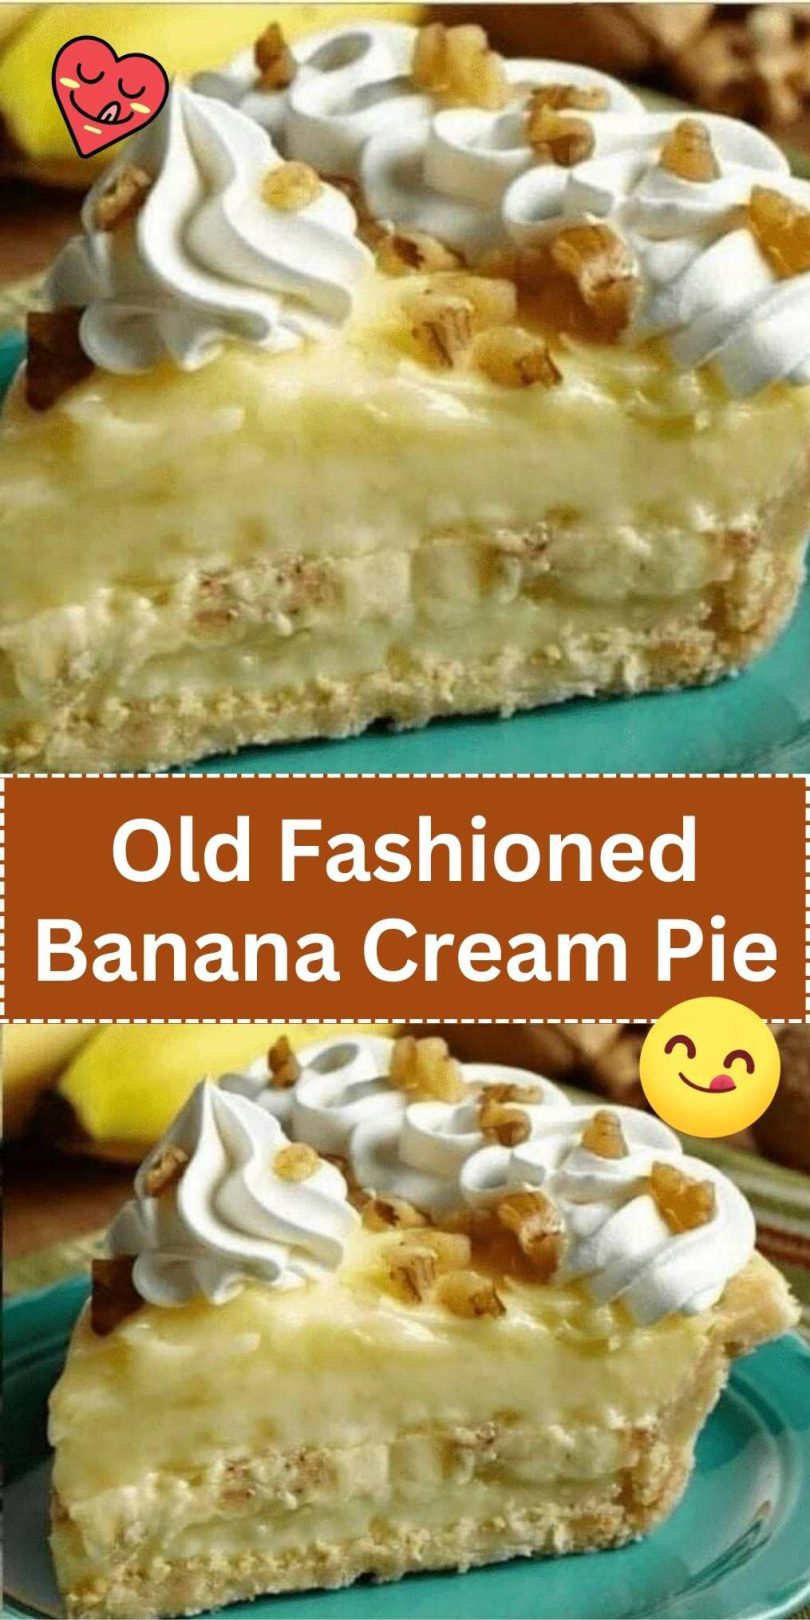 Old Fashioned Banana Cream Pie